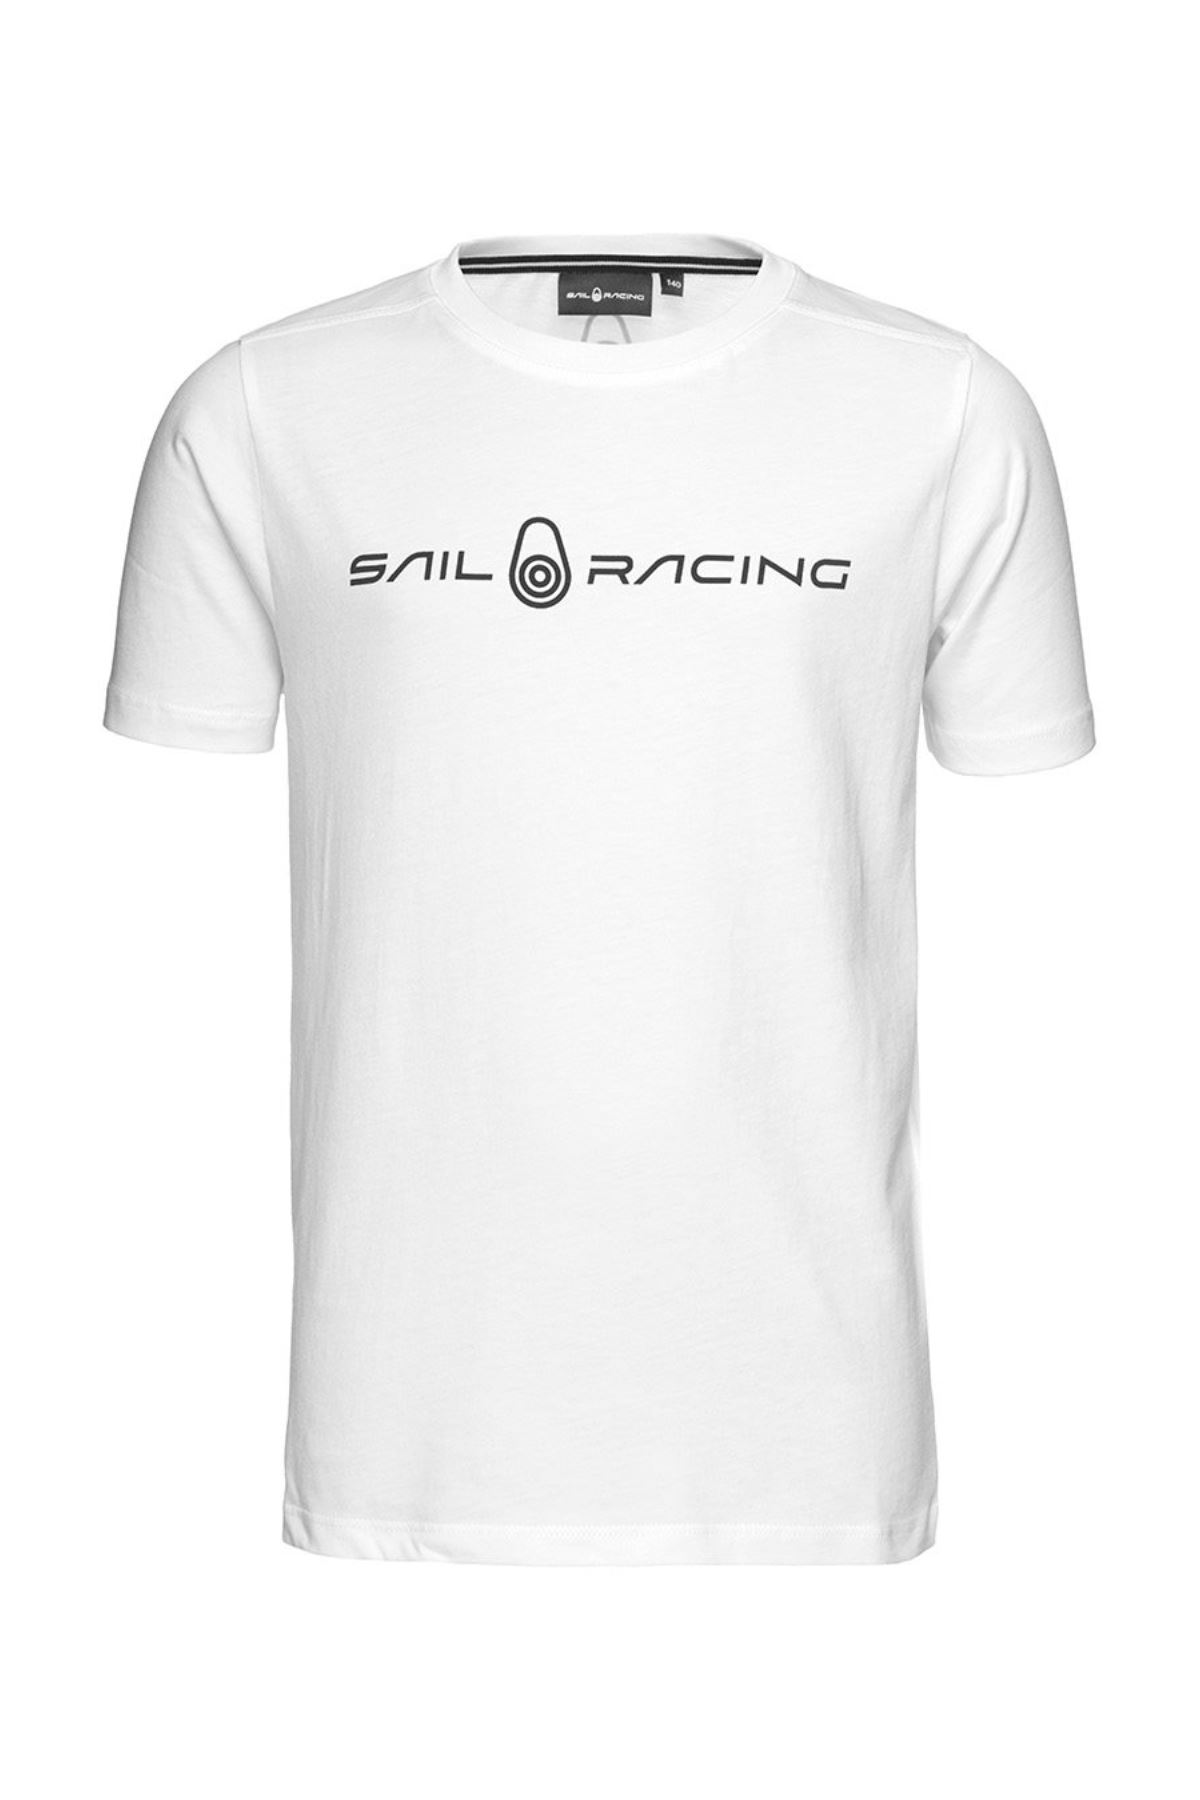 Sail Racing Jr Bowman Tee Beyaz Erkek Çocuk Tişört